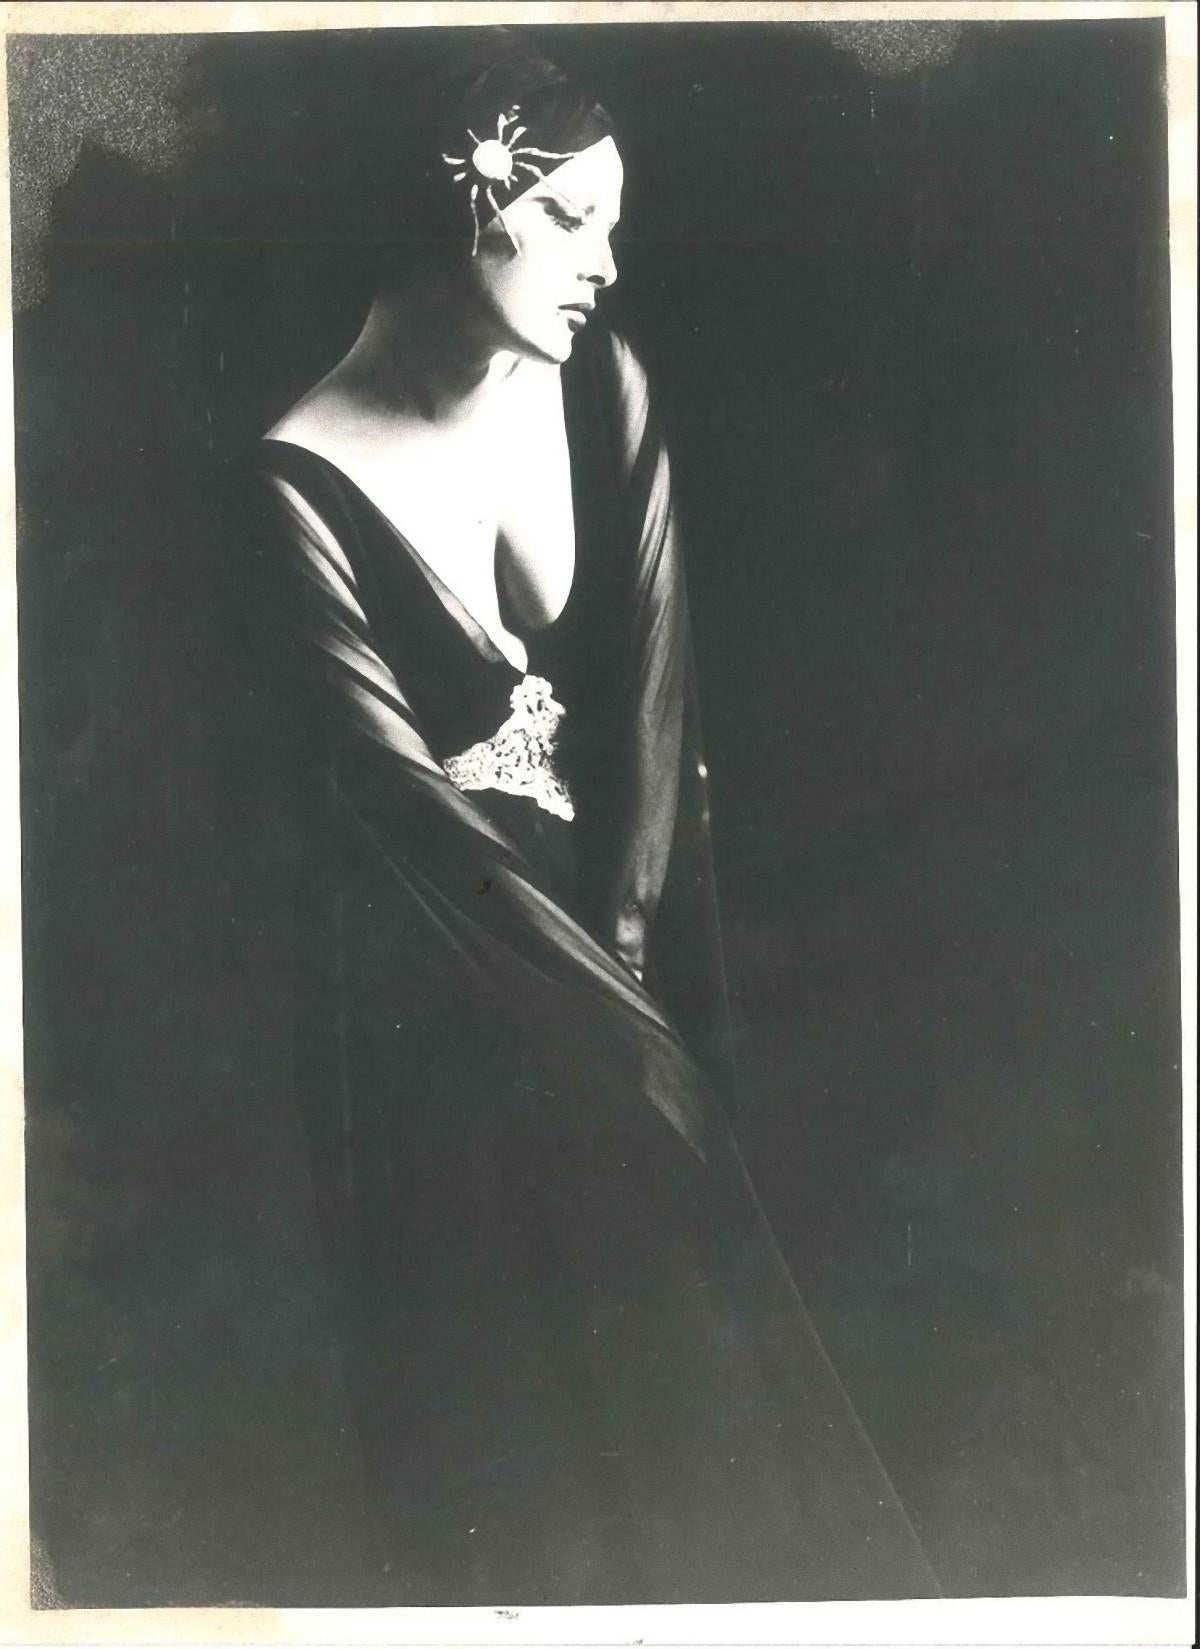 Unknown Portrait Photograph - Fashionable Virna Lisi - Vintage B/W Photographic Print - 1961